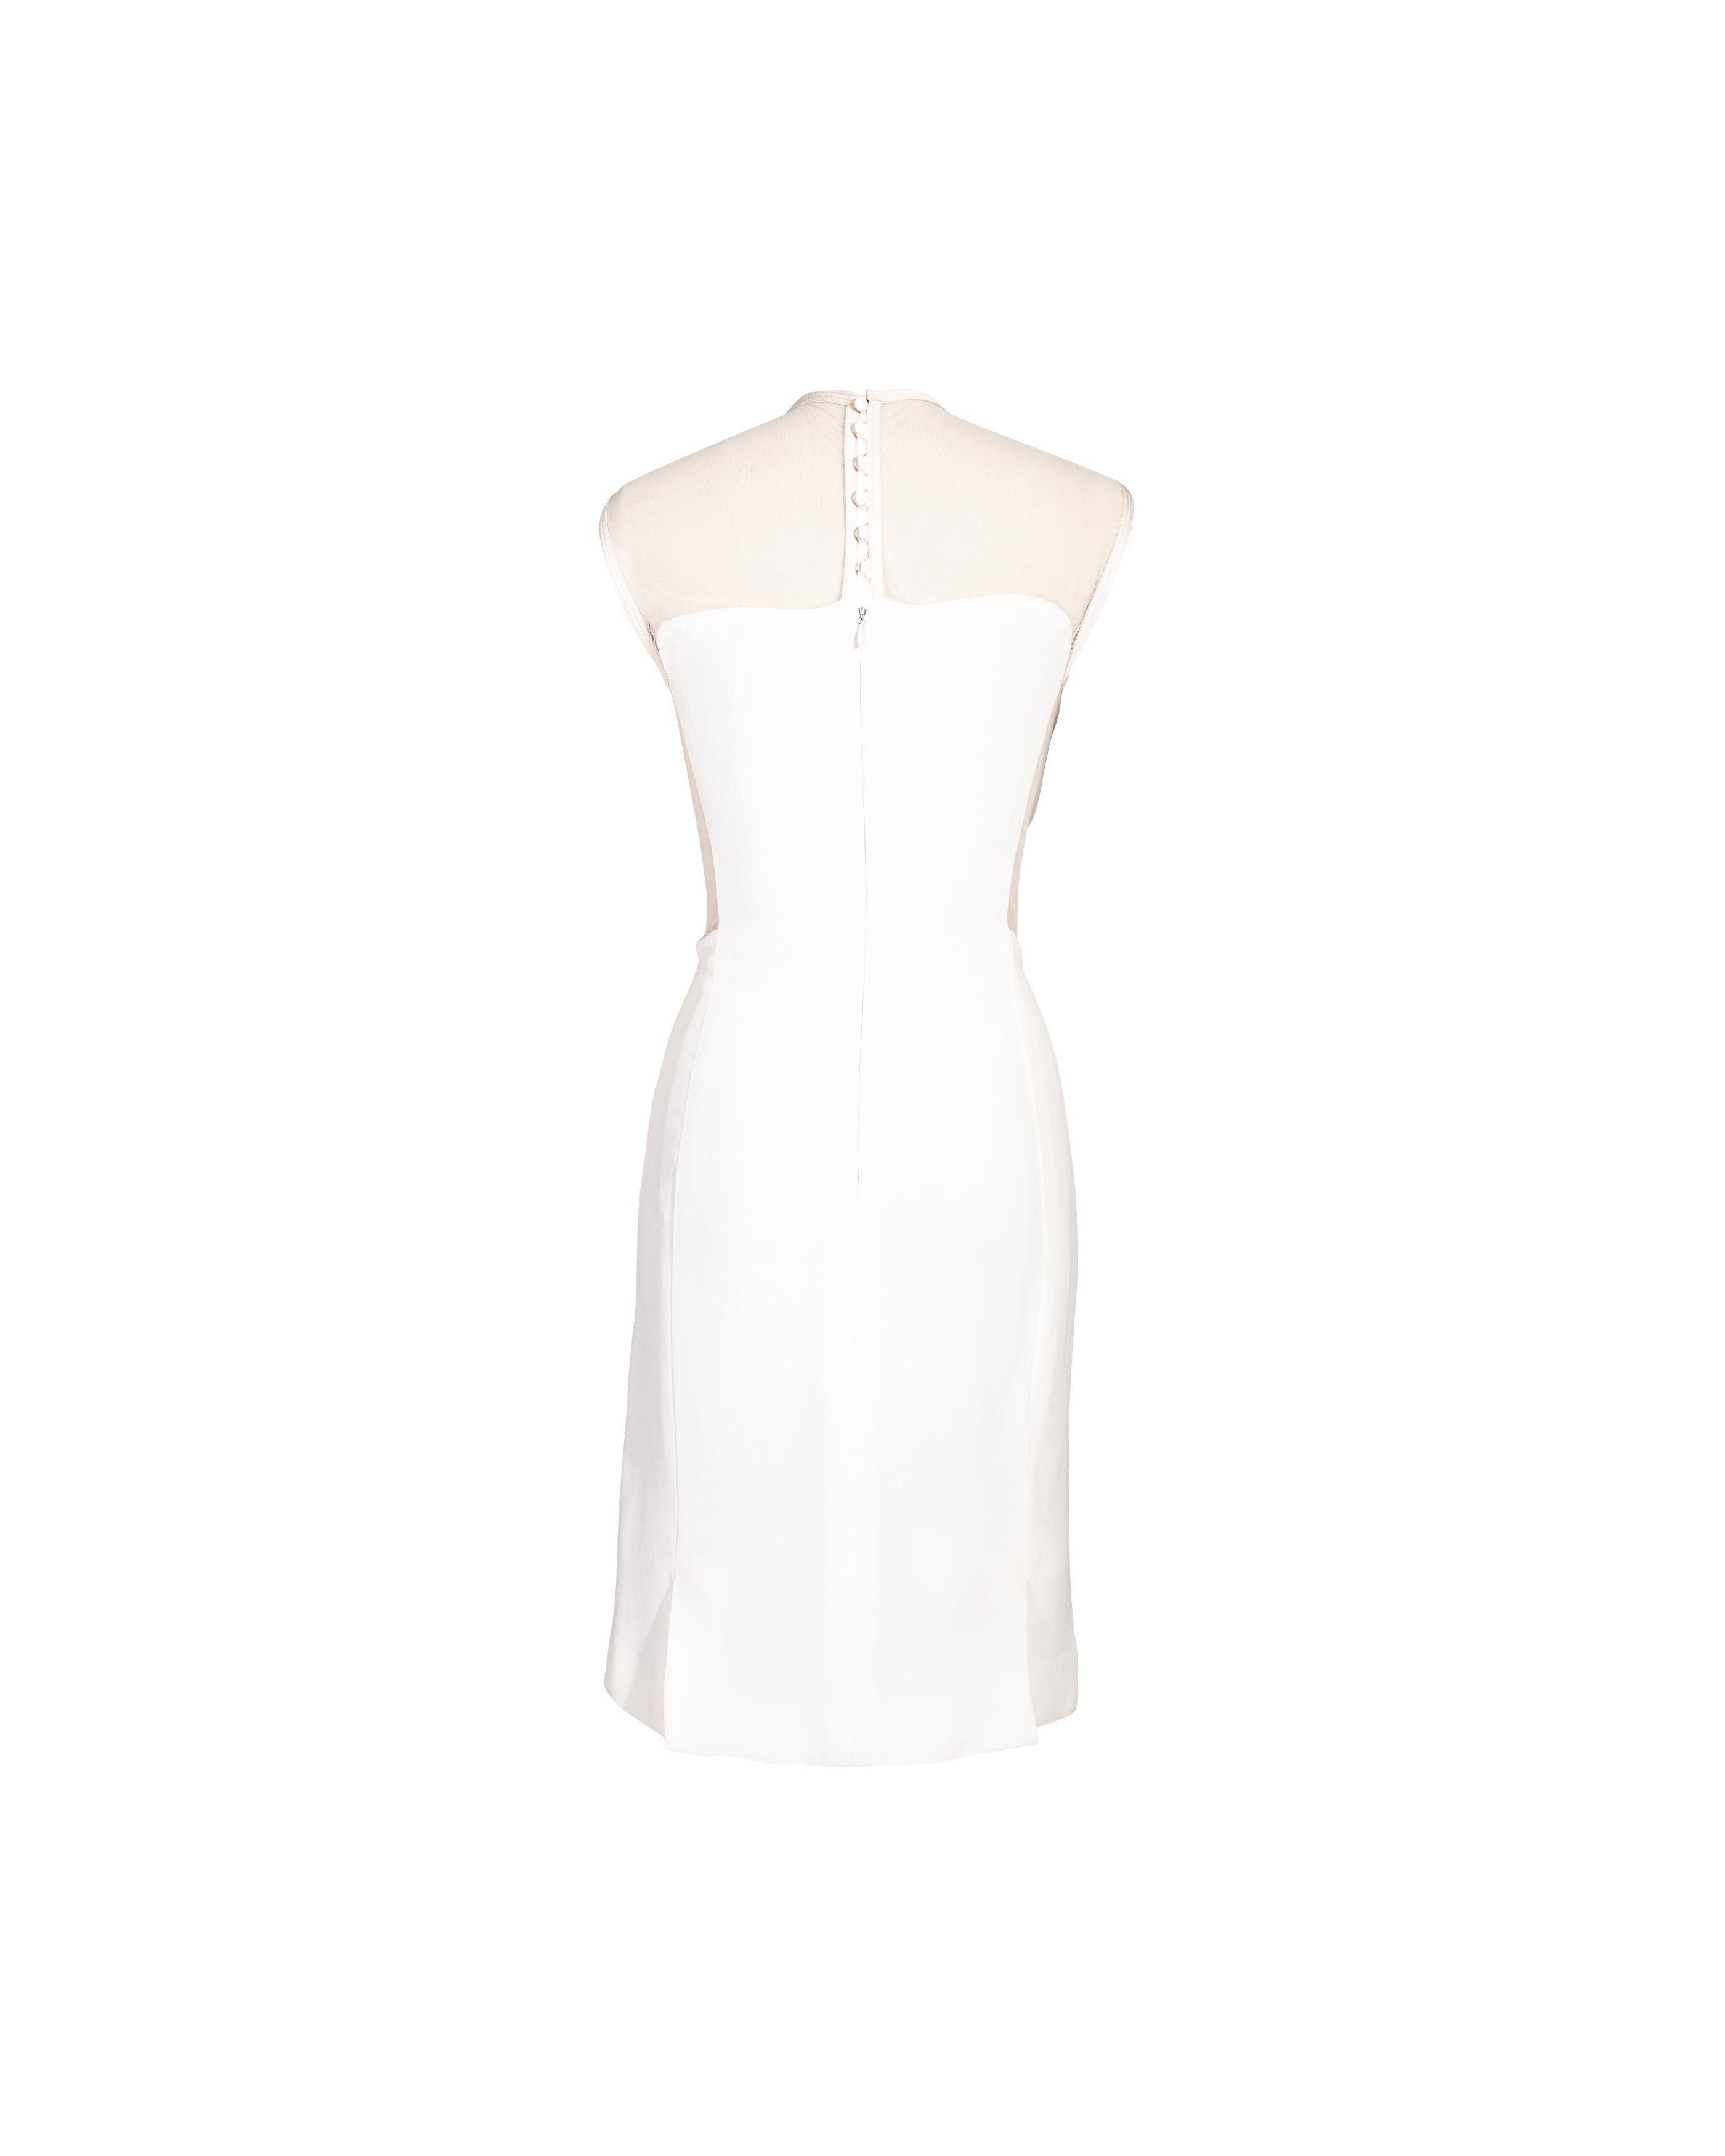 S/S 1996 Gianni Versace White Mesh Mini Dress 1